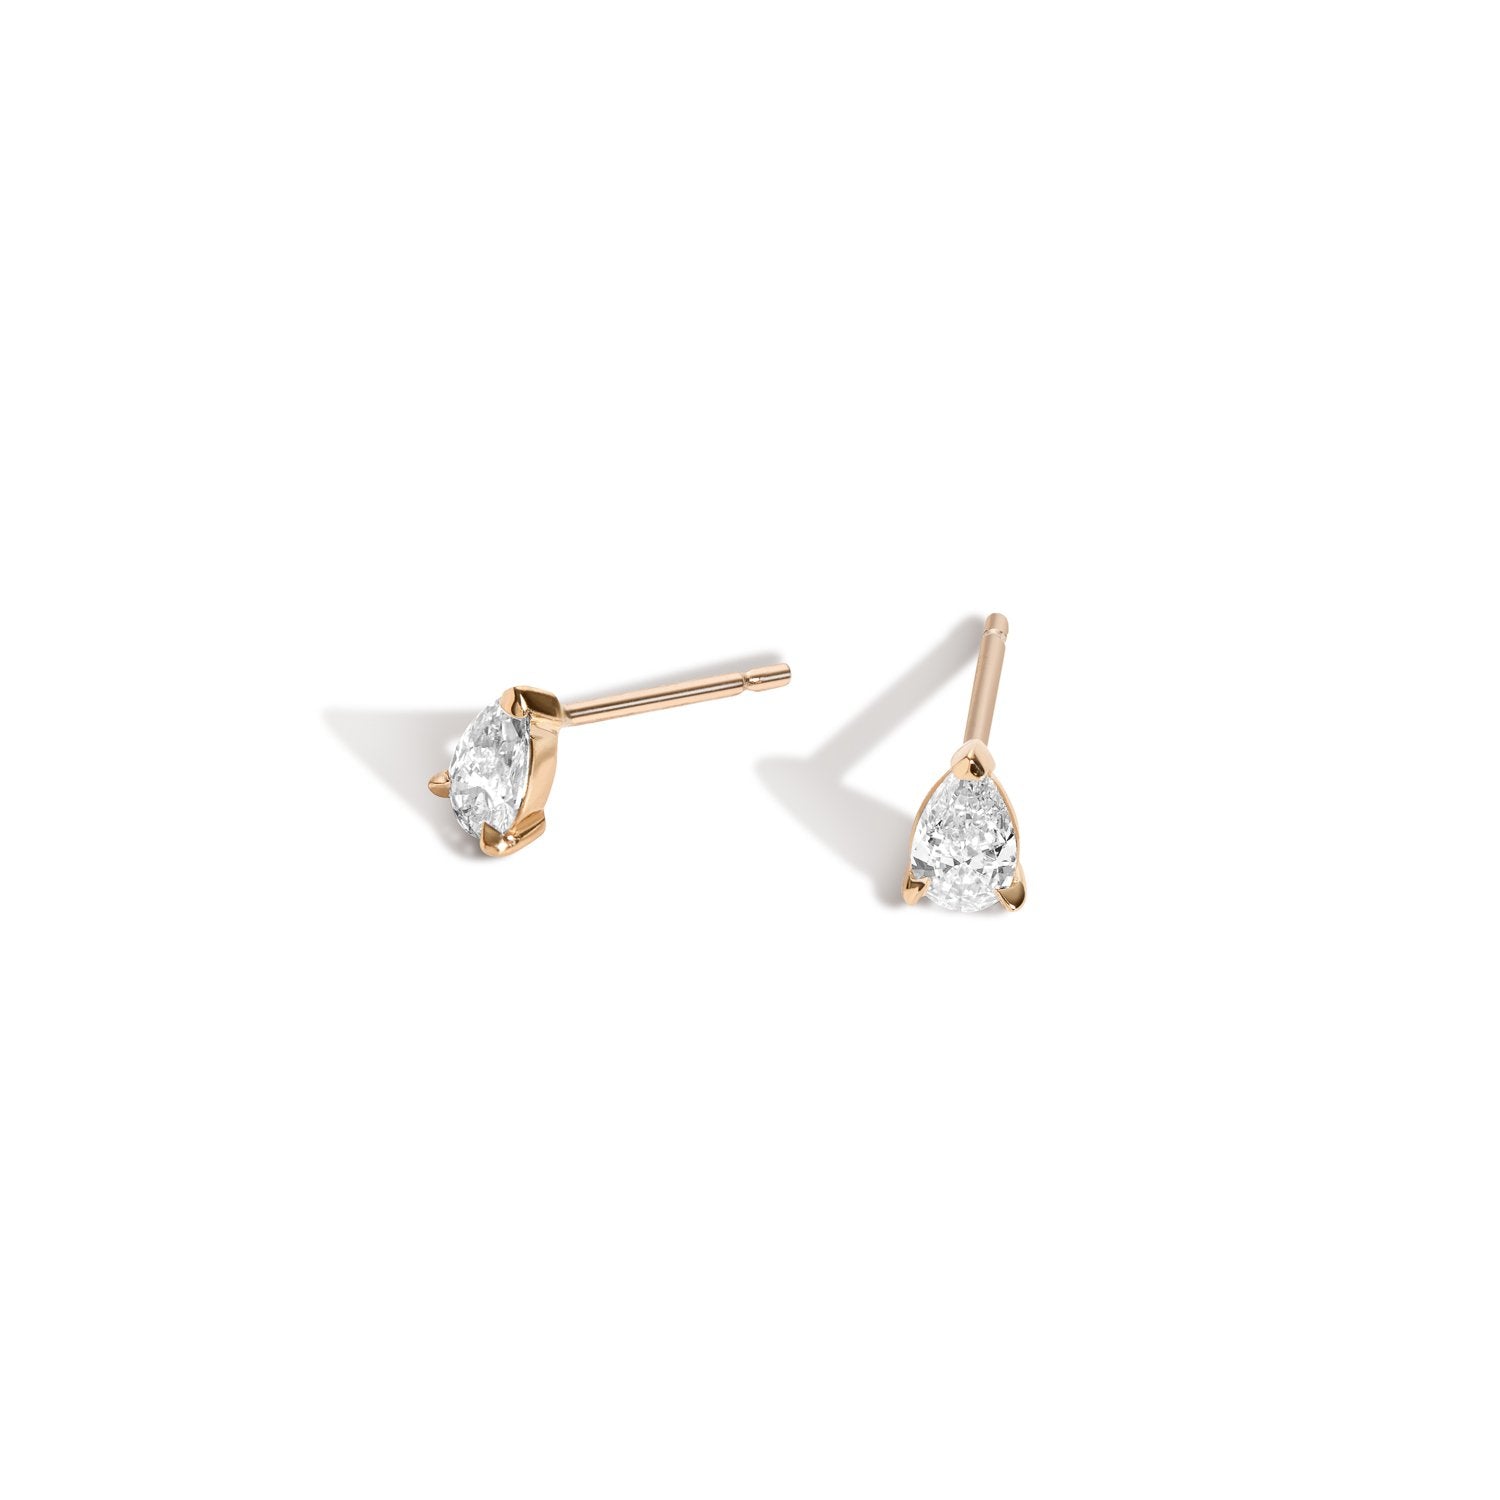 Shahla Karimi Jewelry Love Pear Studs in 14K Yellow Gold w/ White Diamond